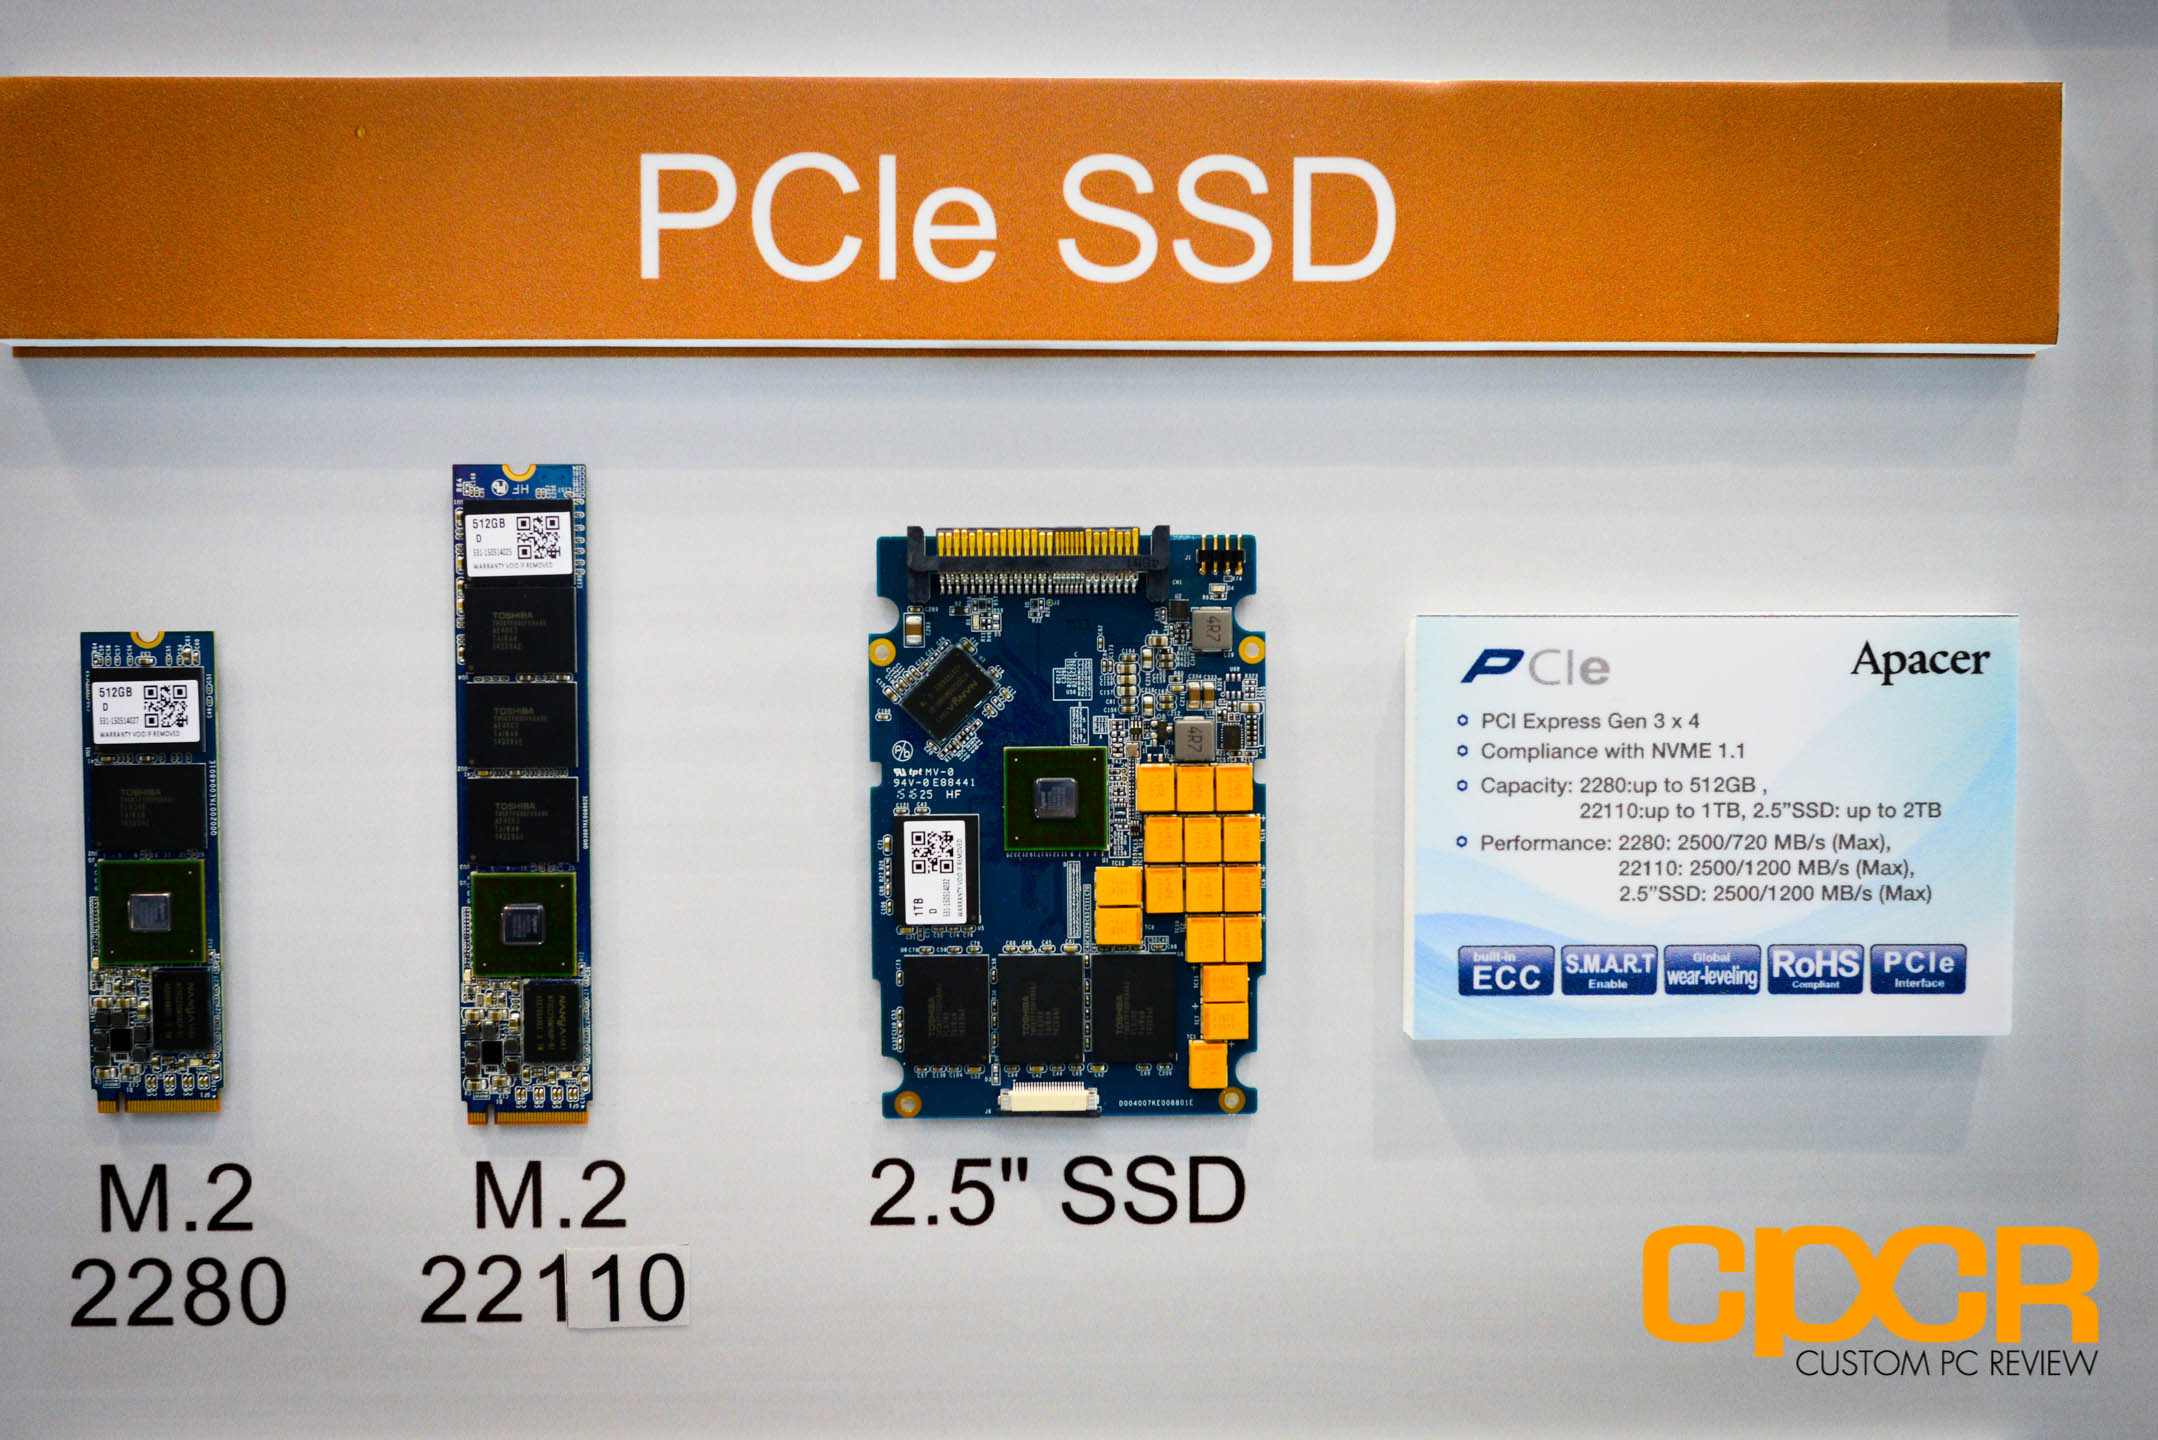 Computex 2015: Apacer Displays PCIe Gen 3 x4 NVMe SSDs